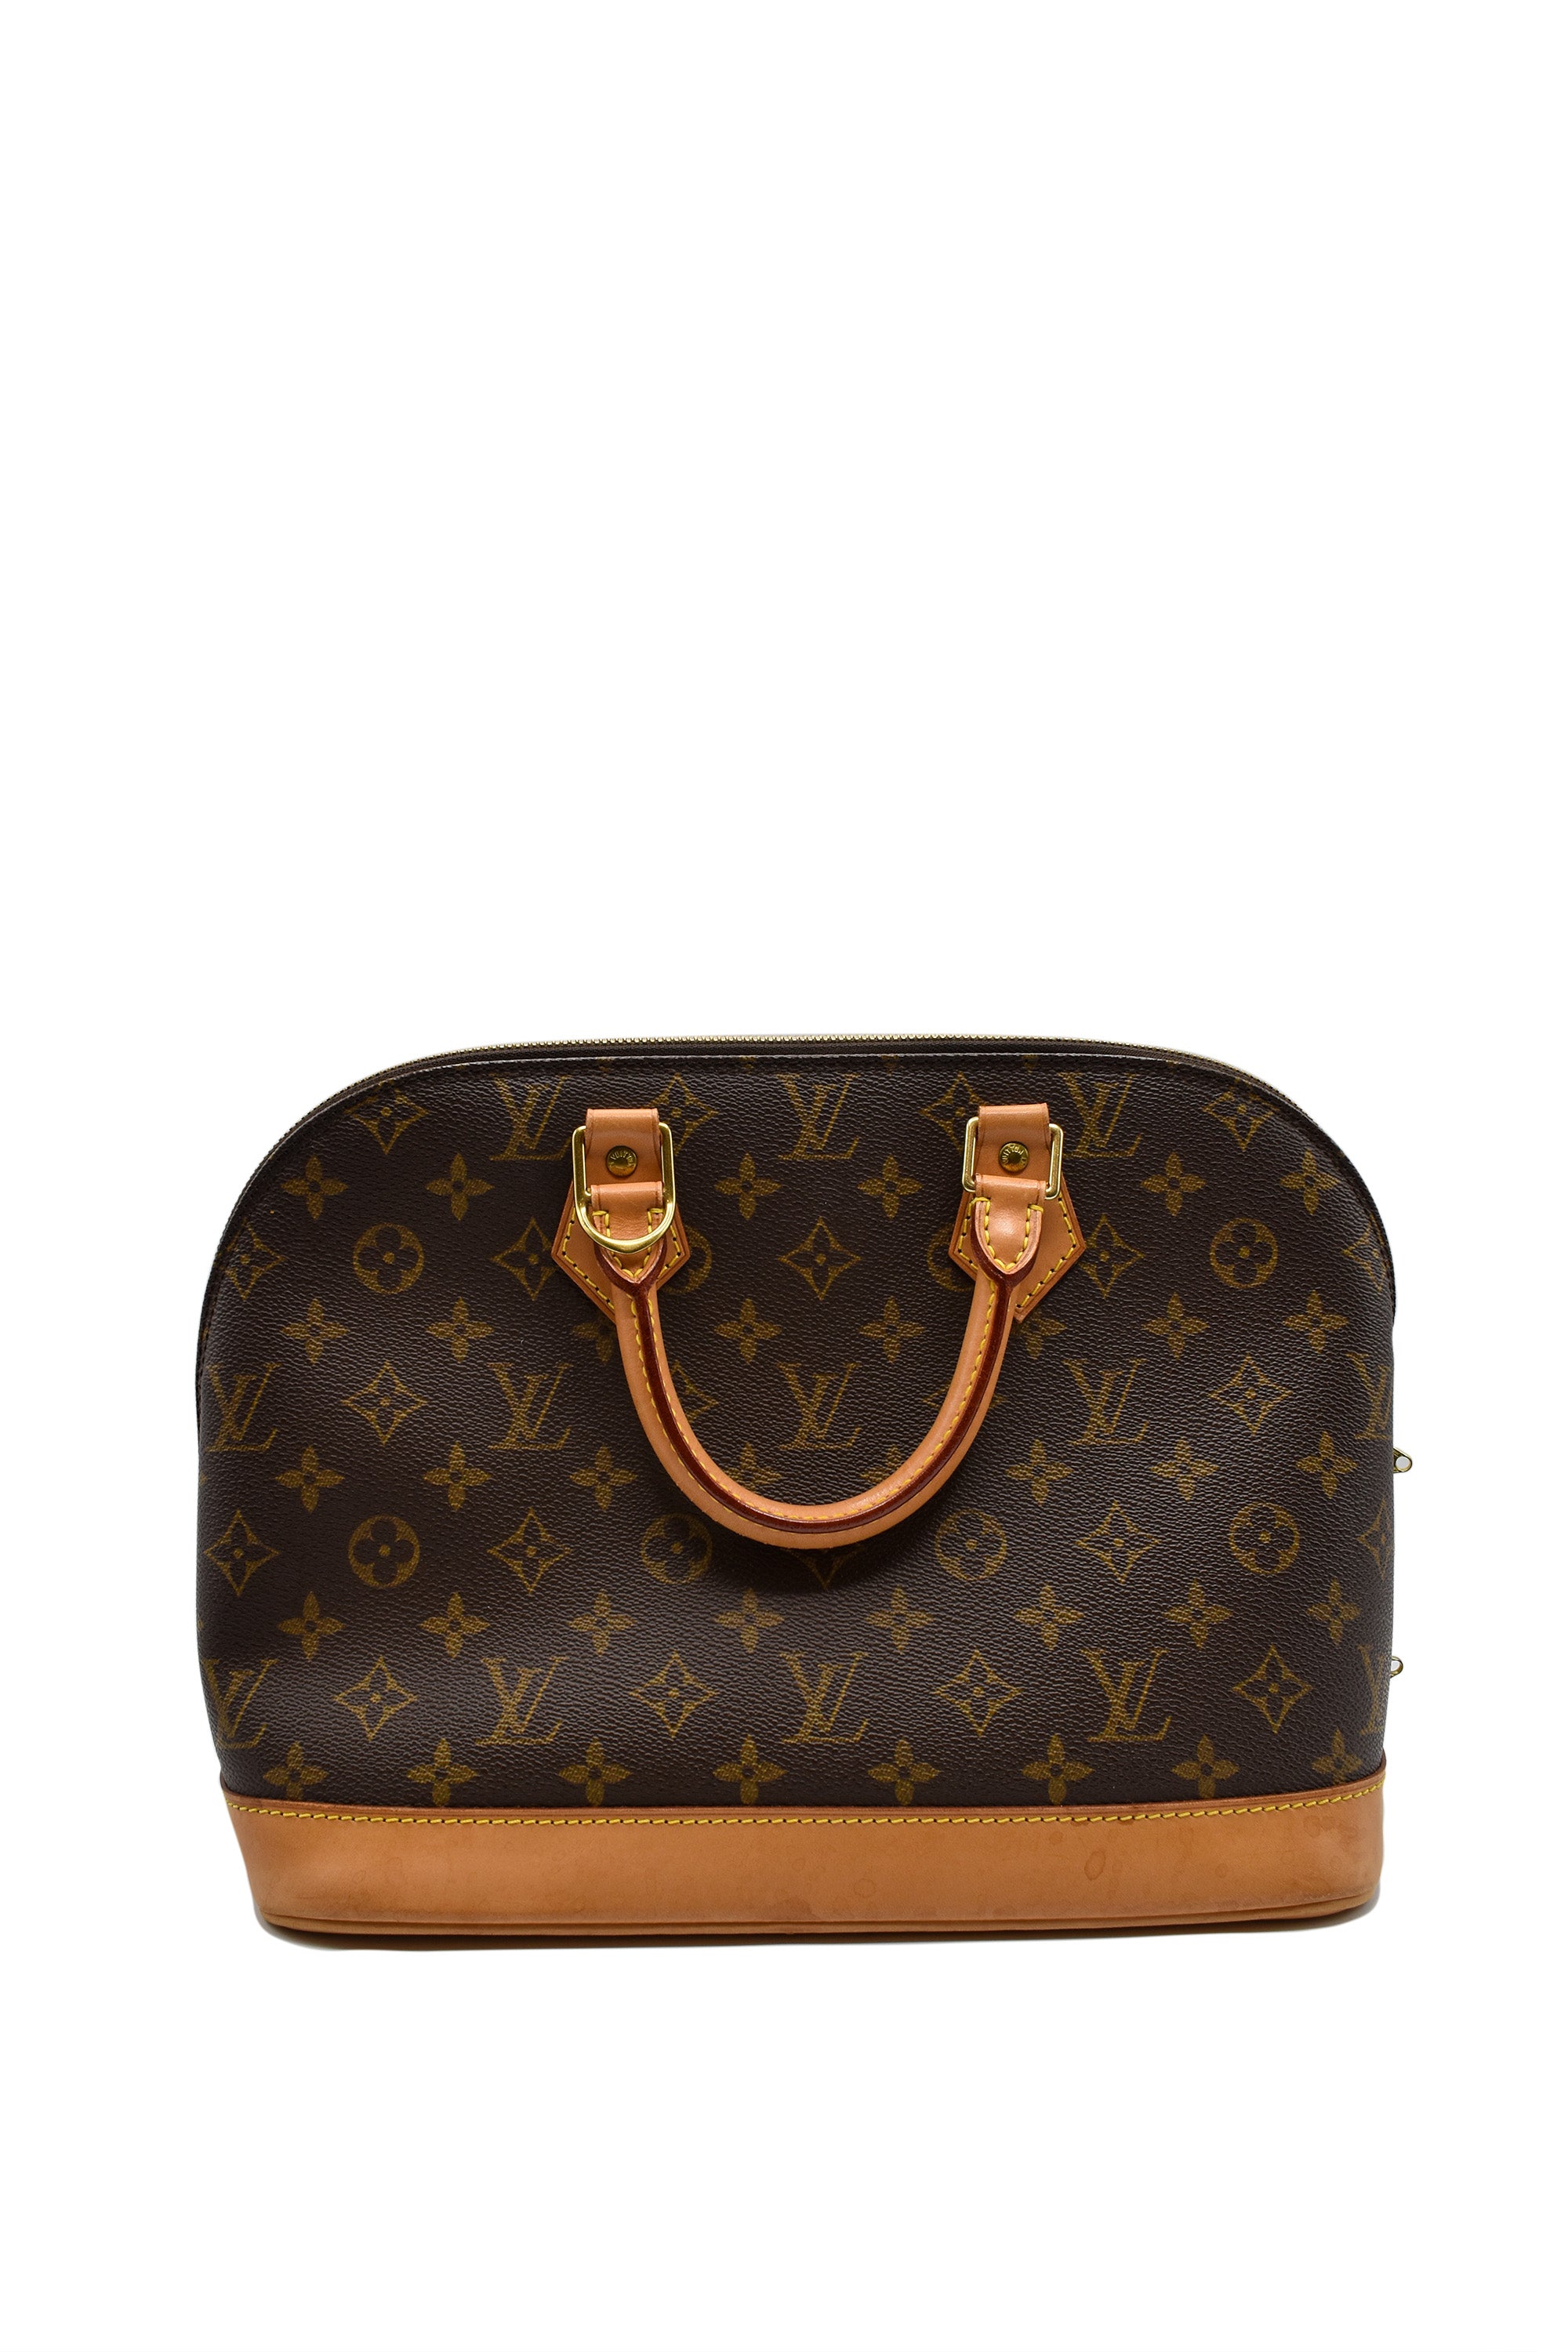 Louis Vuitton - Authenticated Montorgueil Handbag - Cloth Brown for Women, Good Condition